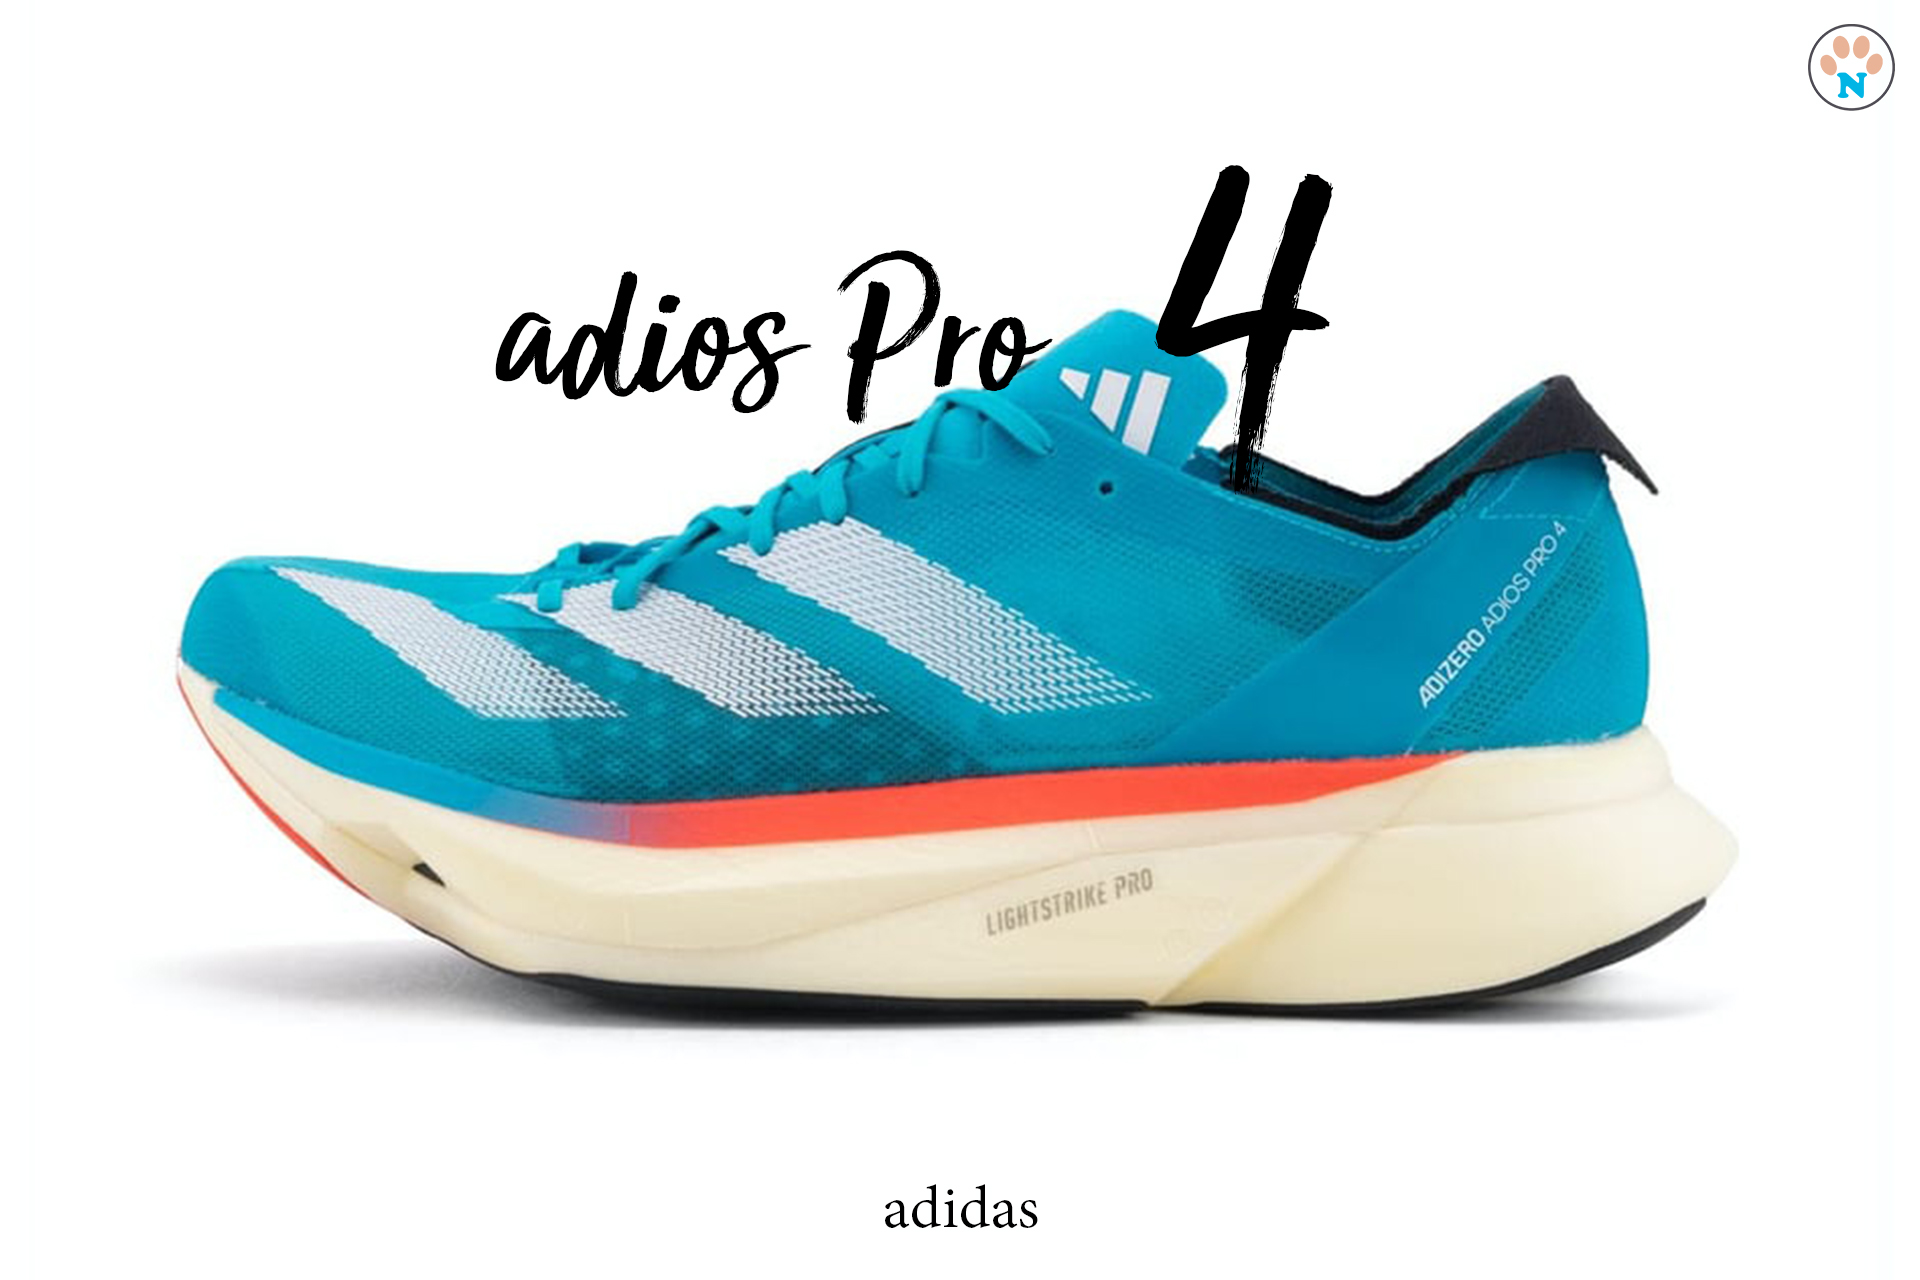 adios Pro 4 หน้าตาแทบไม่เปลี่ยนจากรุ่นก่อน